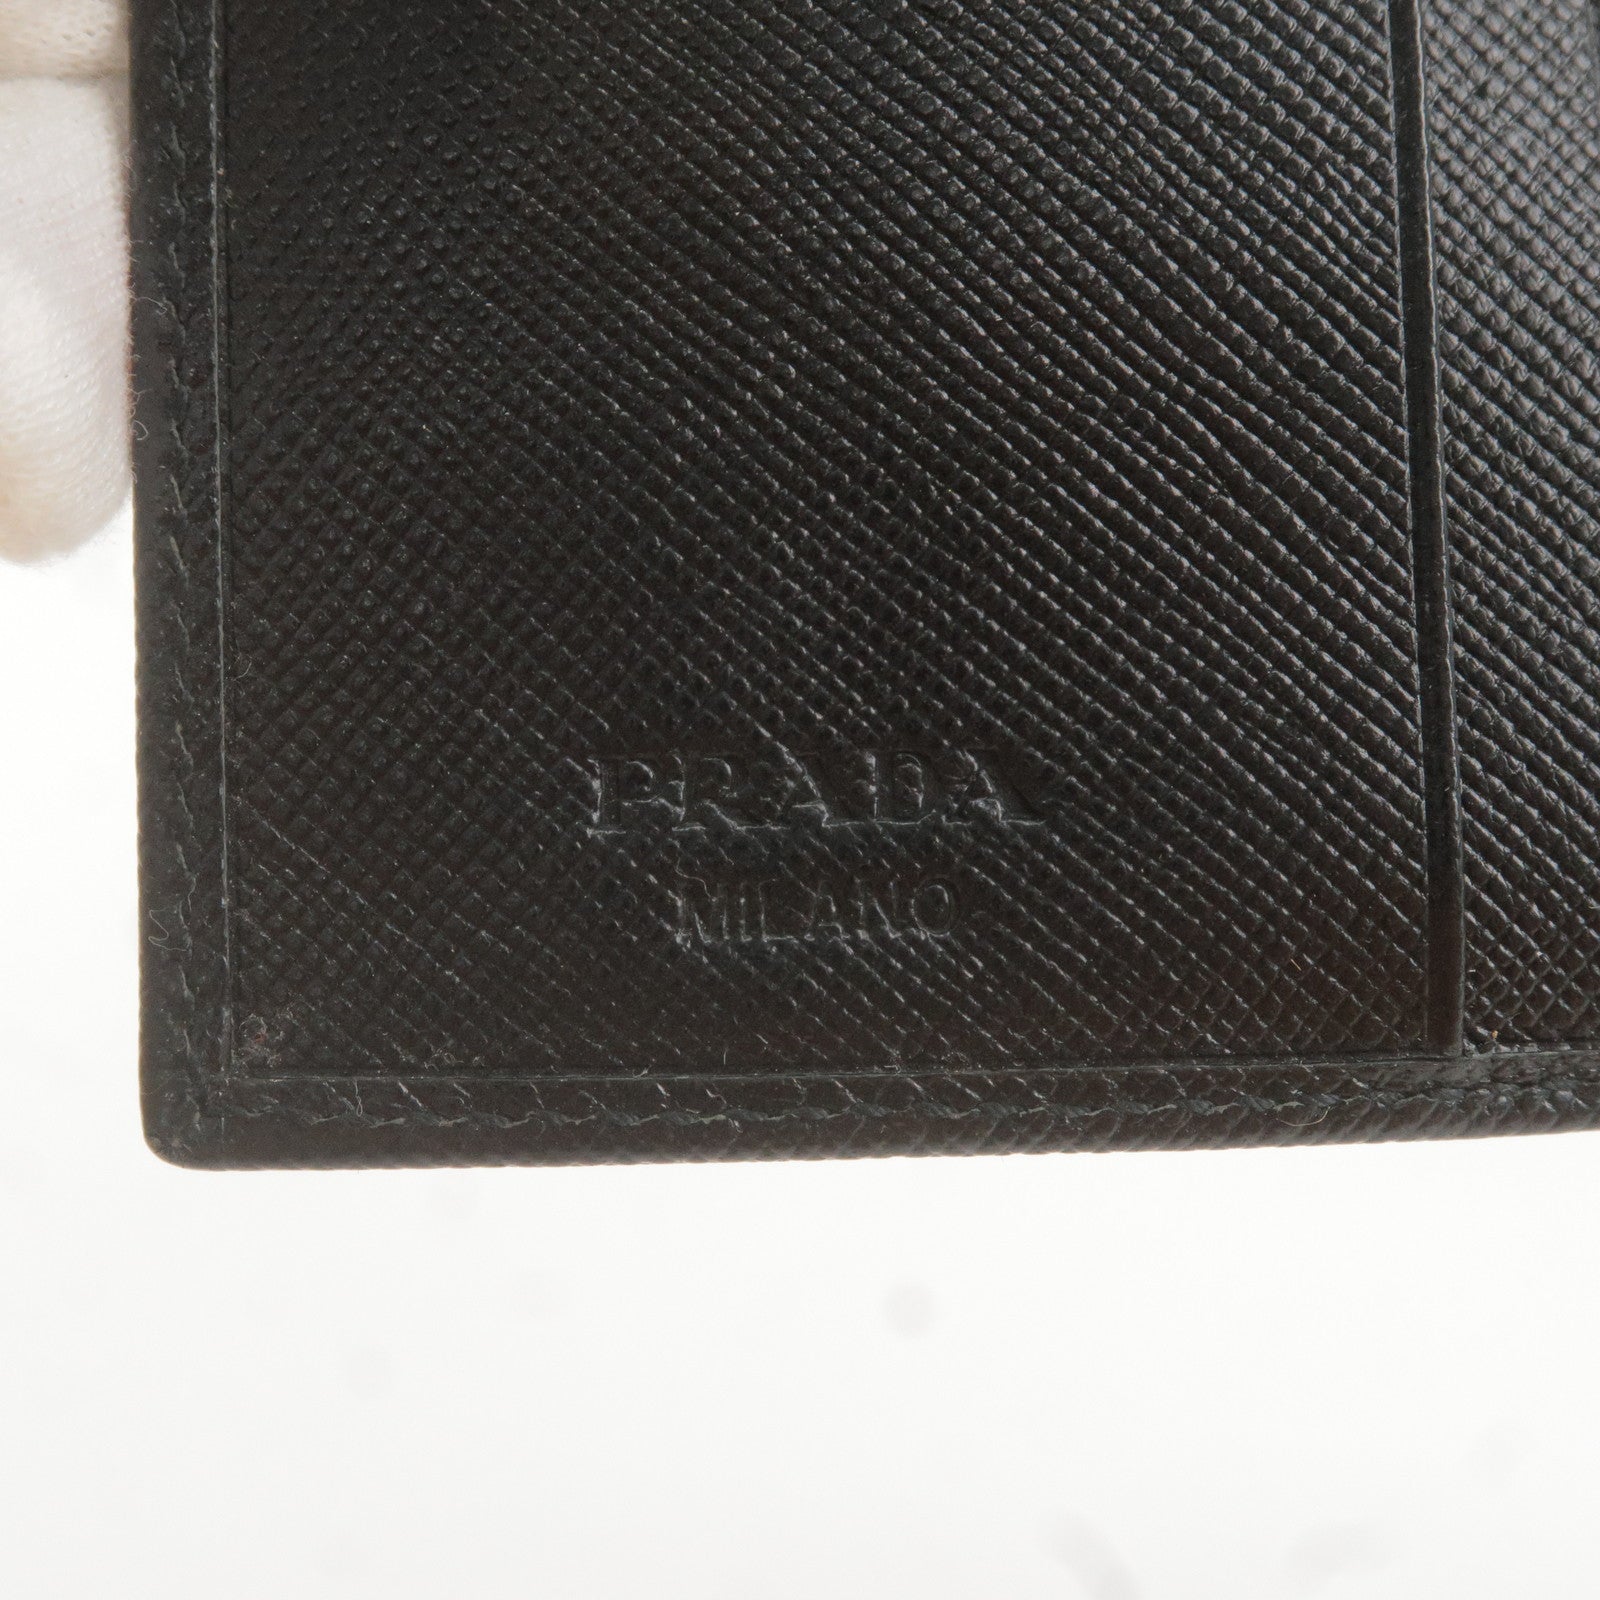 money clip cardholder, Prada